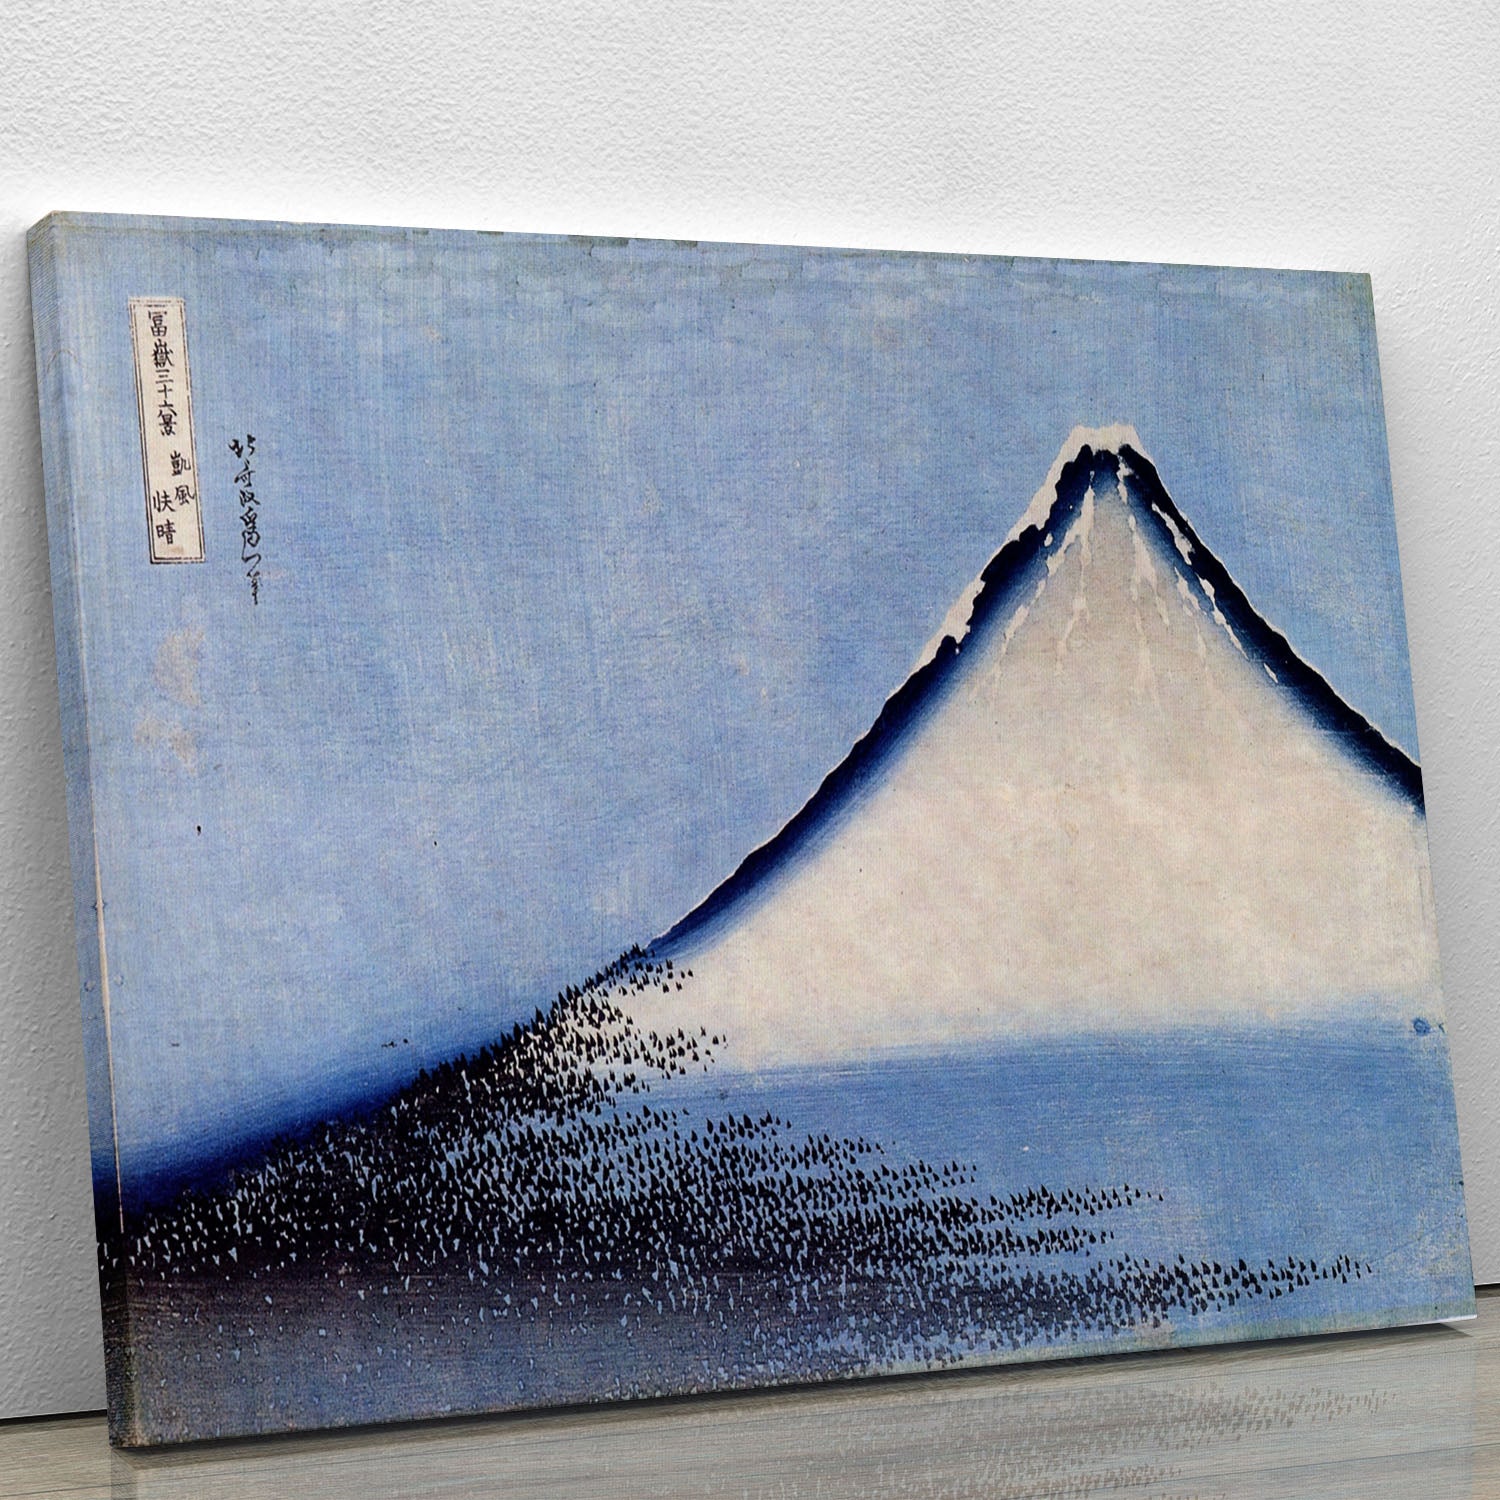 Mount Fuji 2 by Hokusai Canvas Print or Poster - Canvas Art Rocks - 1